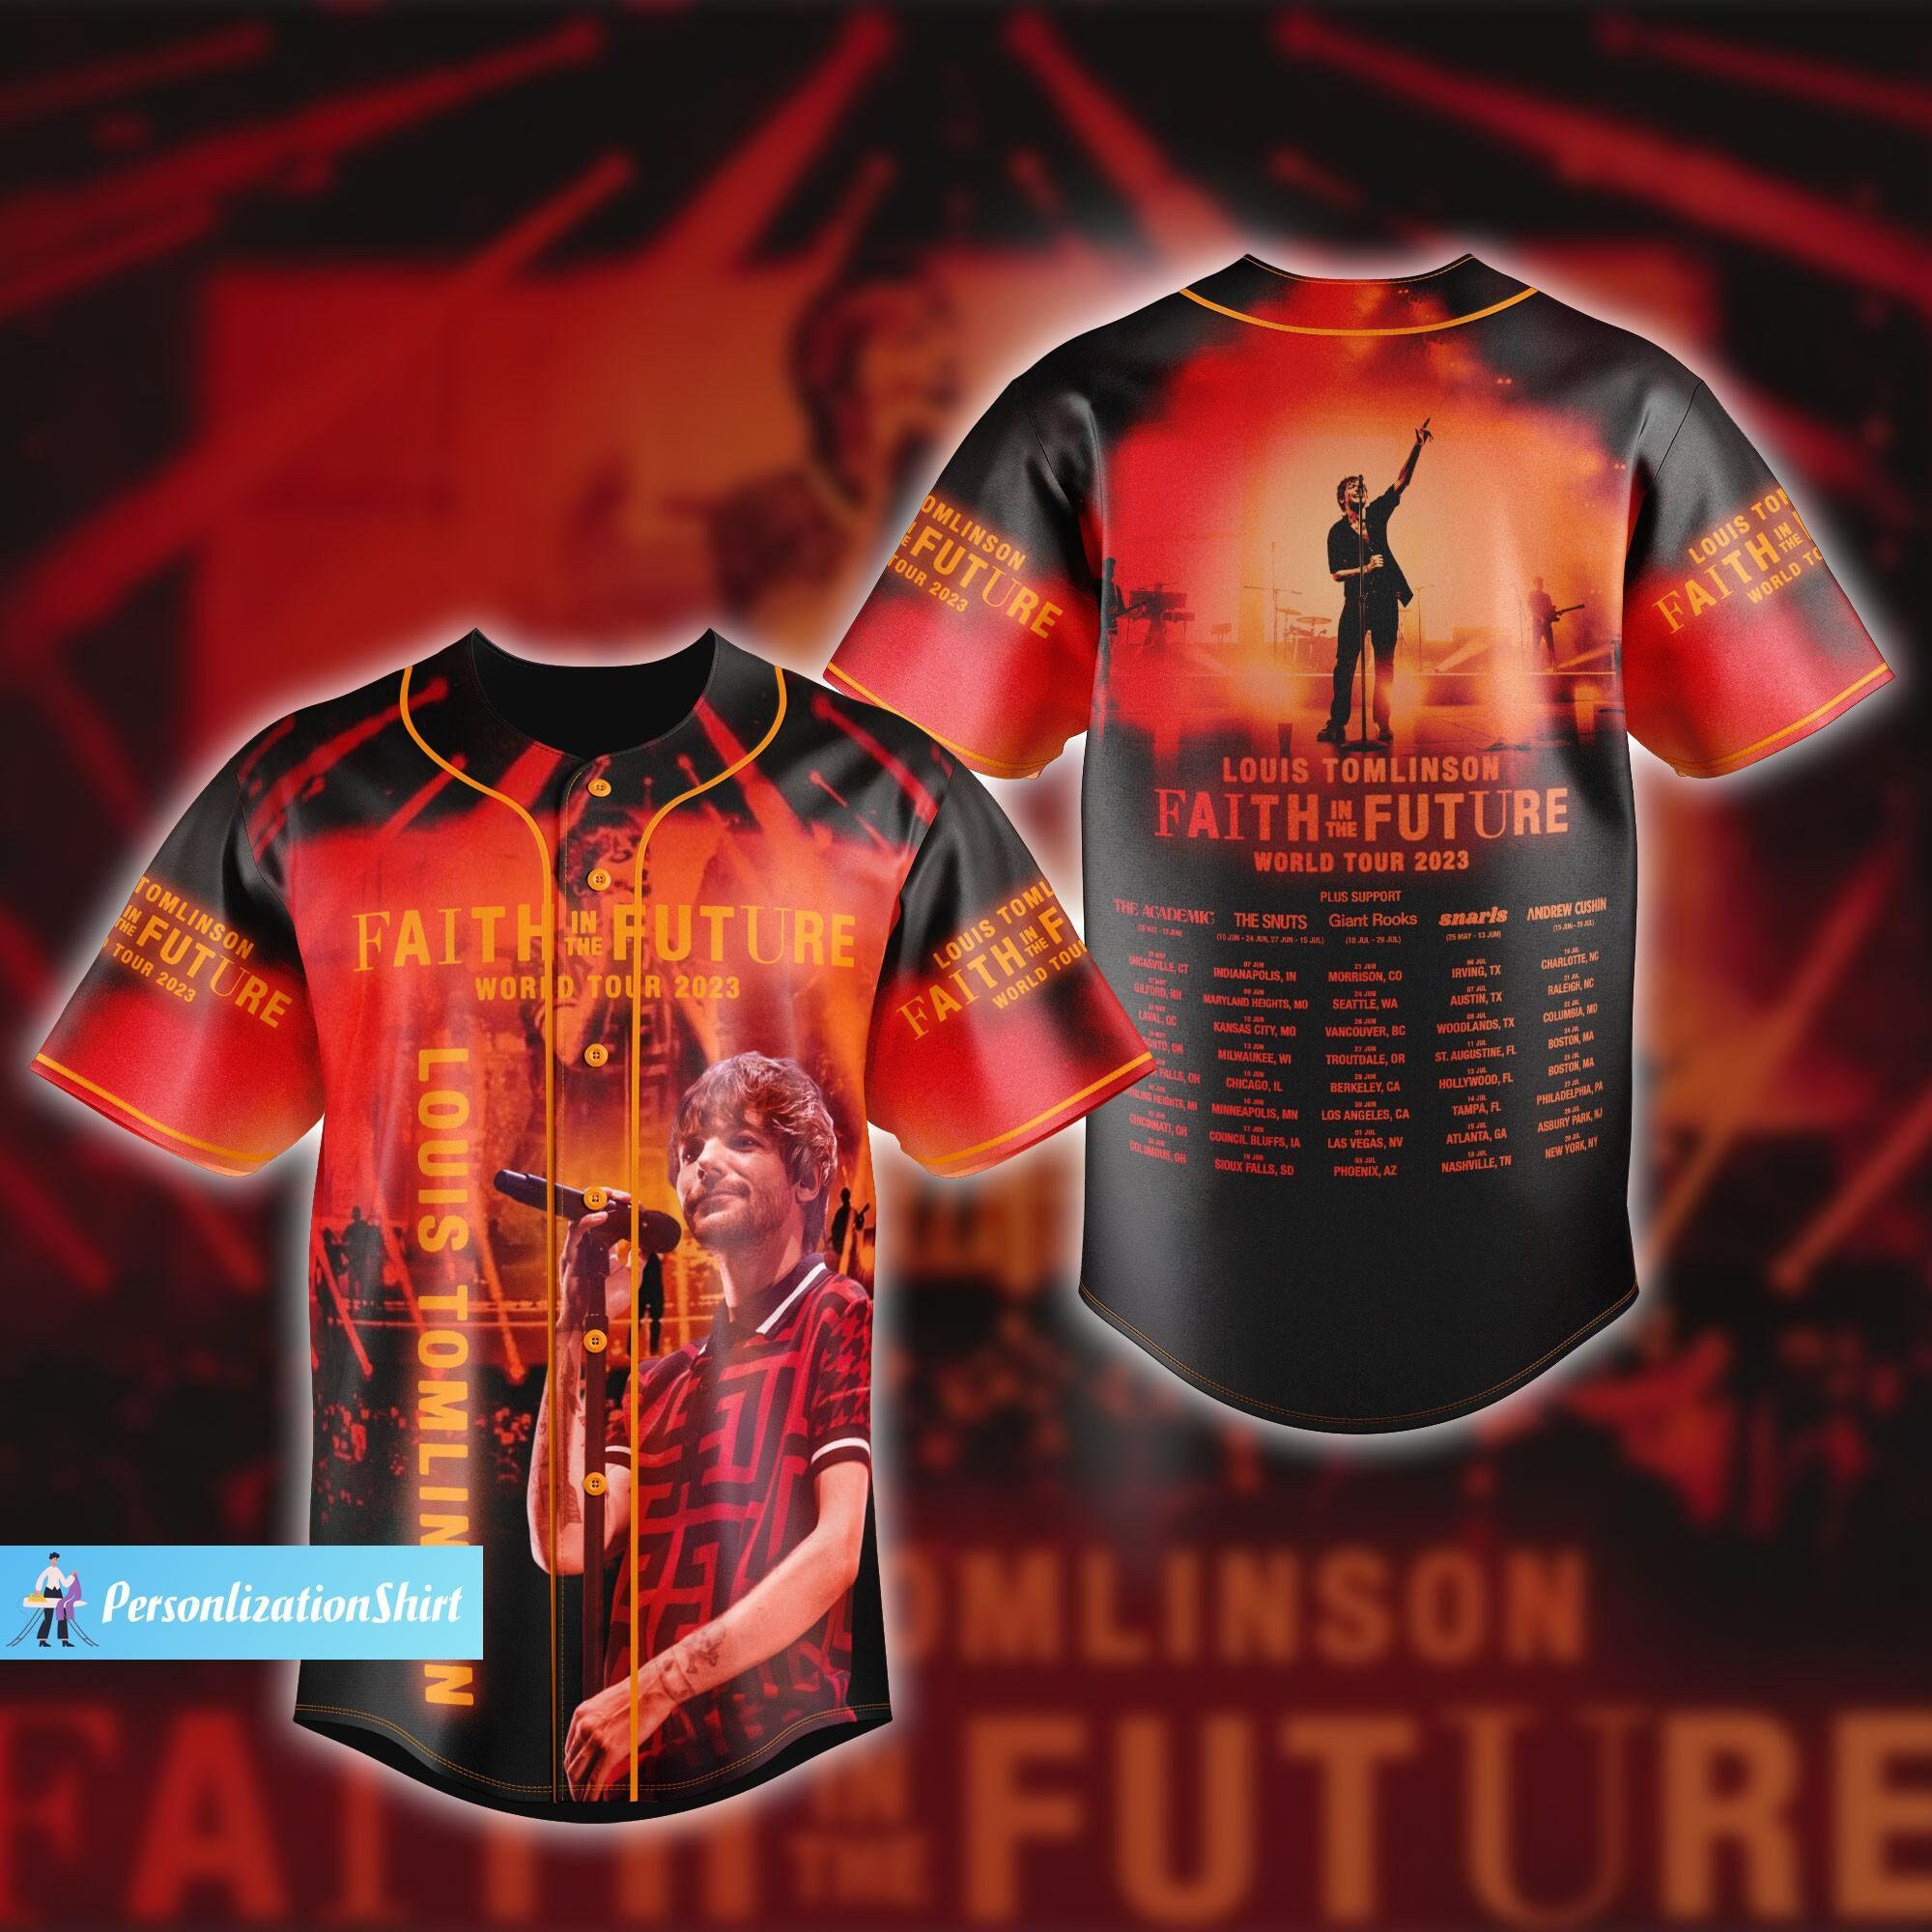 Louis Tomlinson Faith In The Future World Tour 2023 Personalized Baseball  Jersey - Growkoc